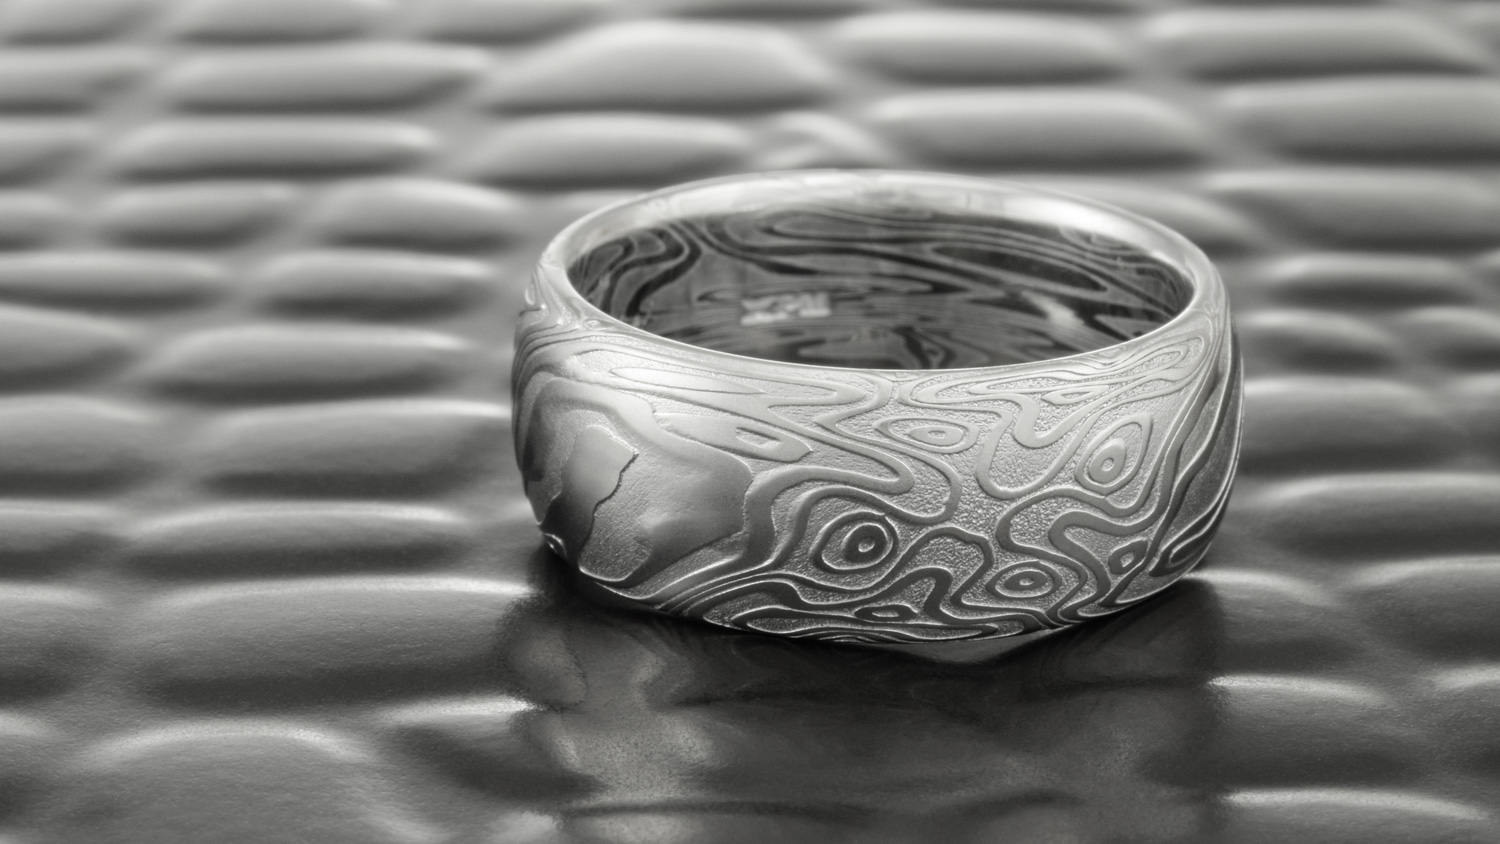 Damascus Steel Ring by Steven Jacob